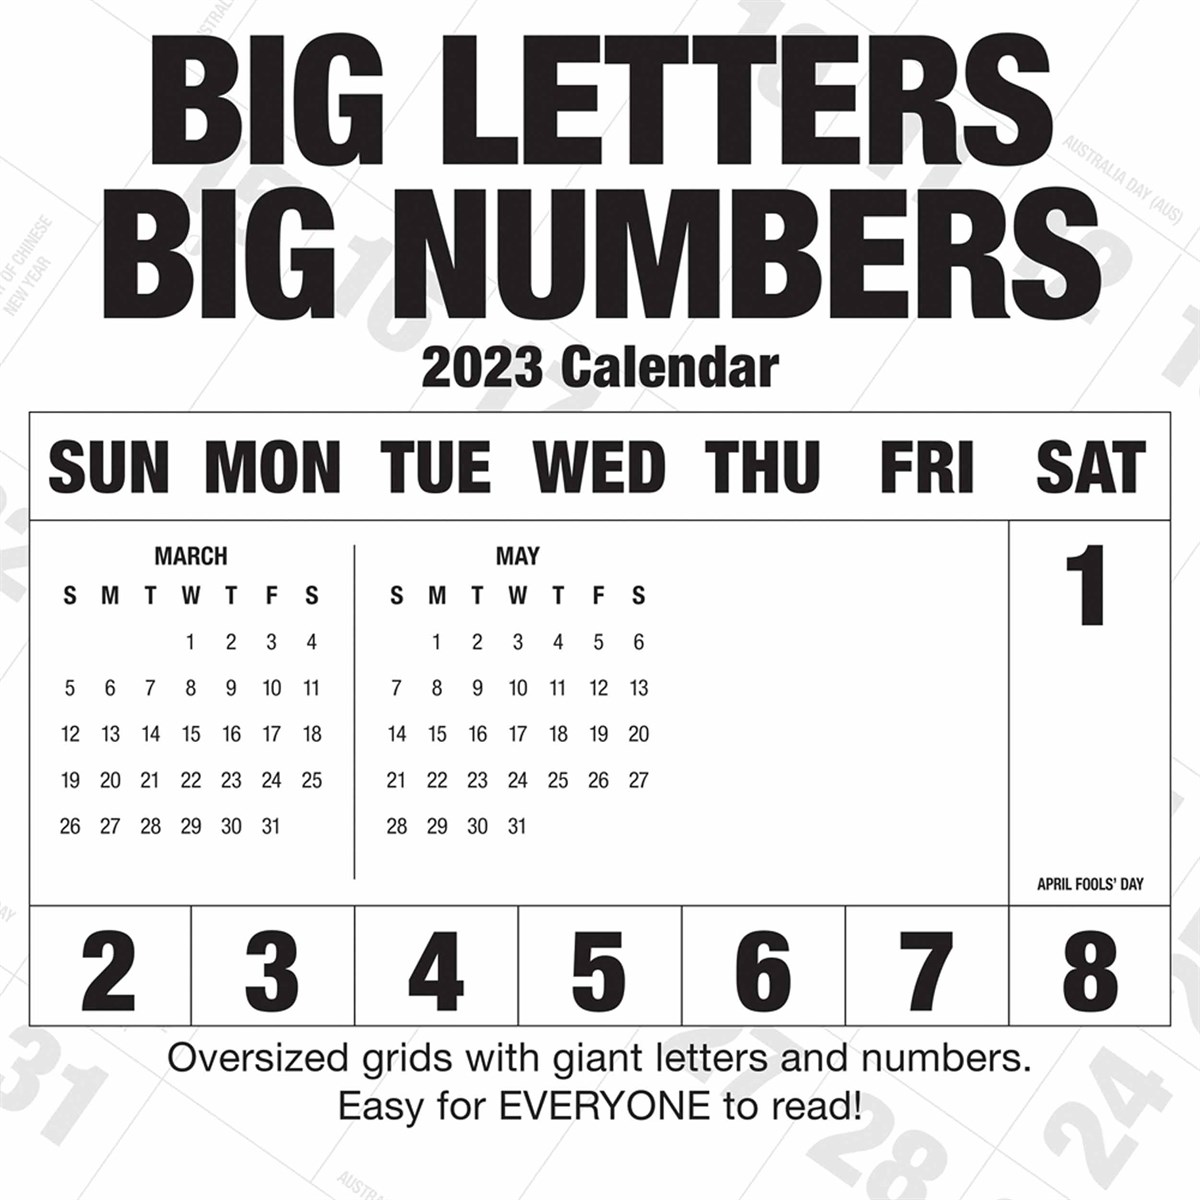 Big Letters, Big Numbers 2023 Calendars